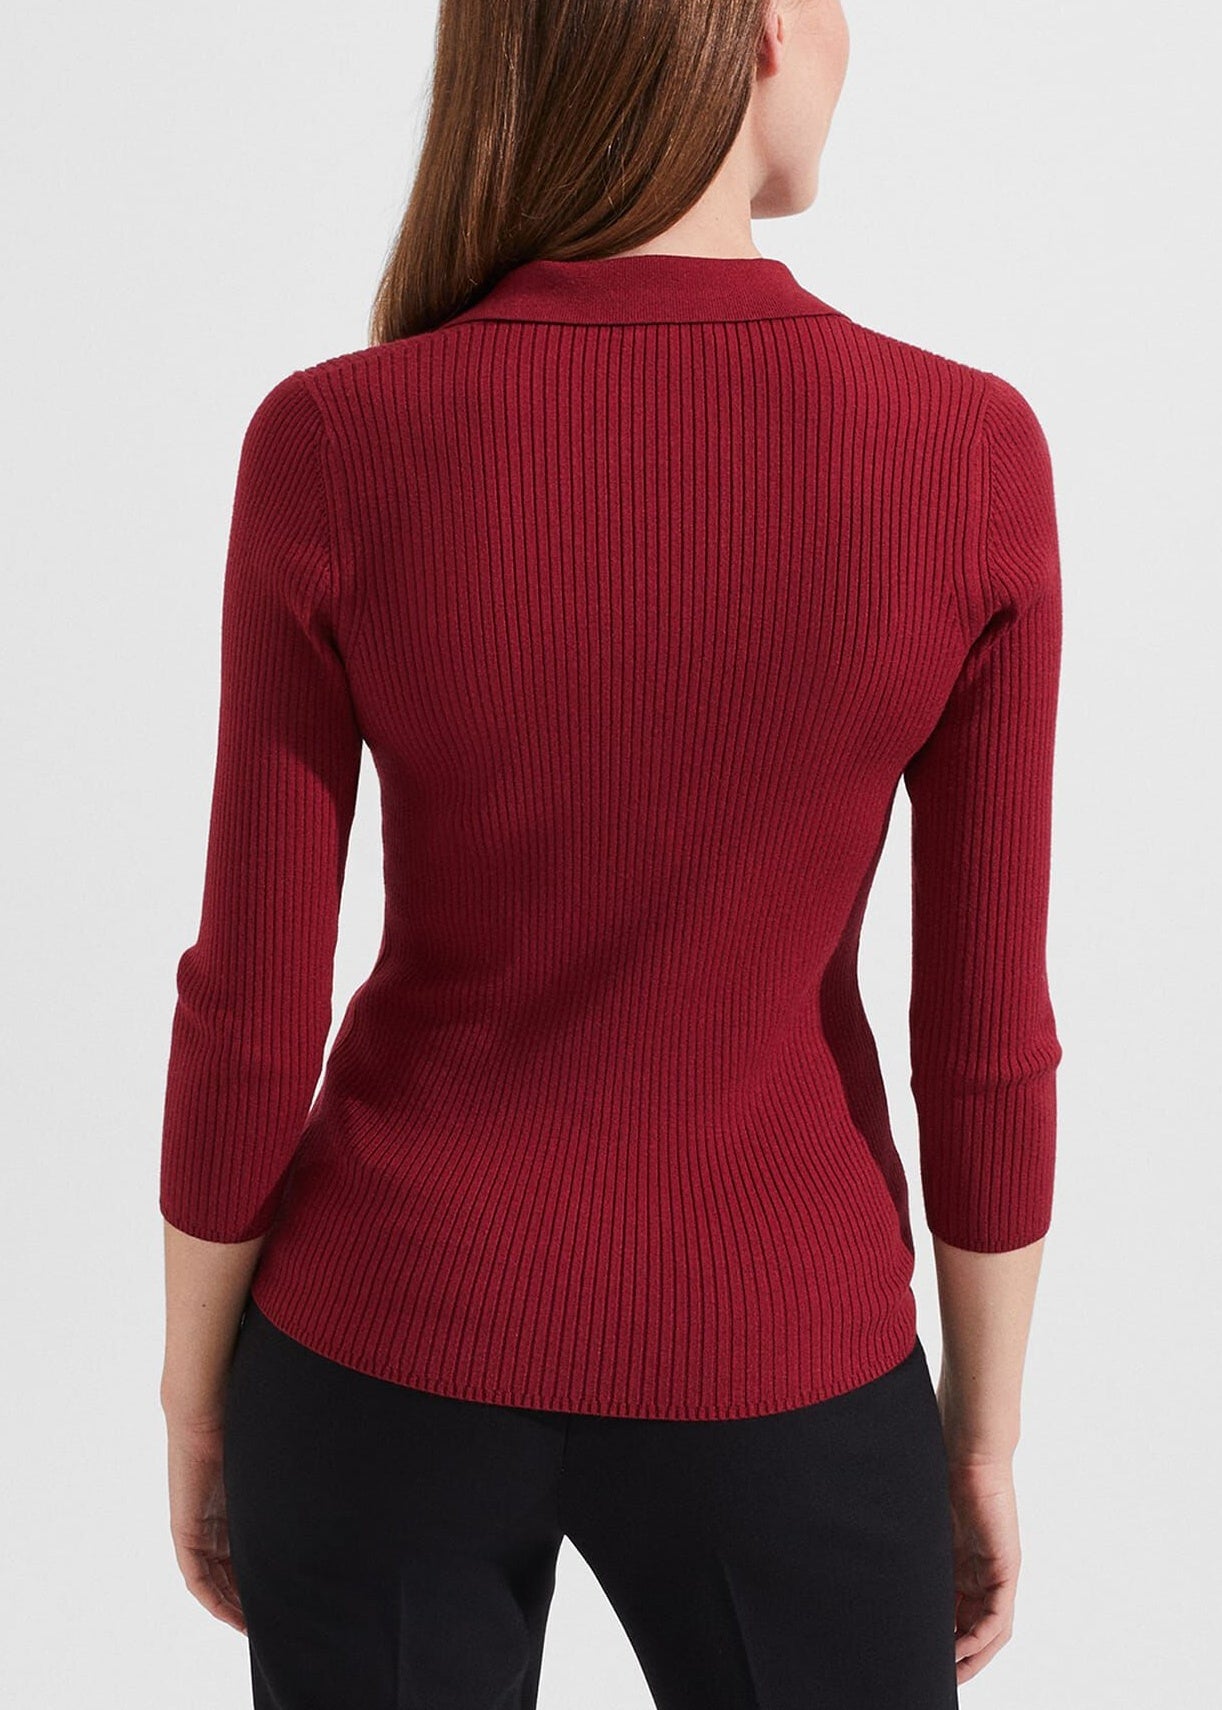 Edie Knitted Shirt 0223/9043/1185l00 Rhubarb-Red